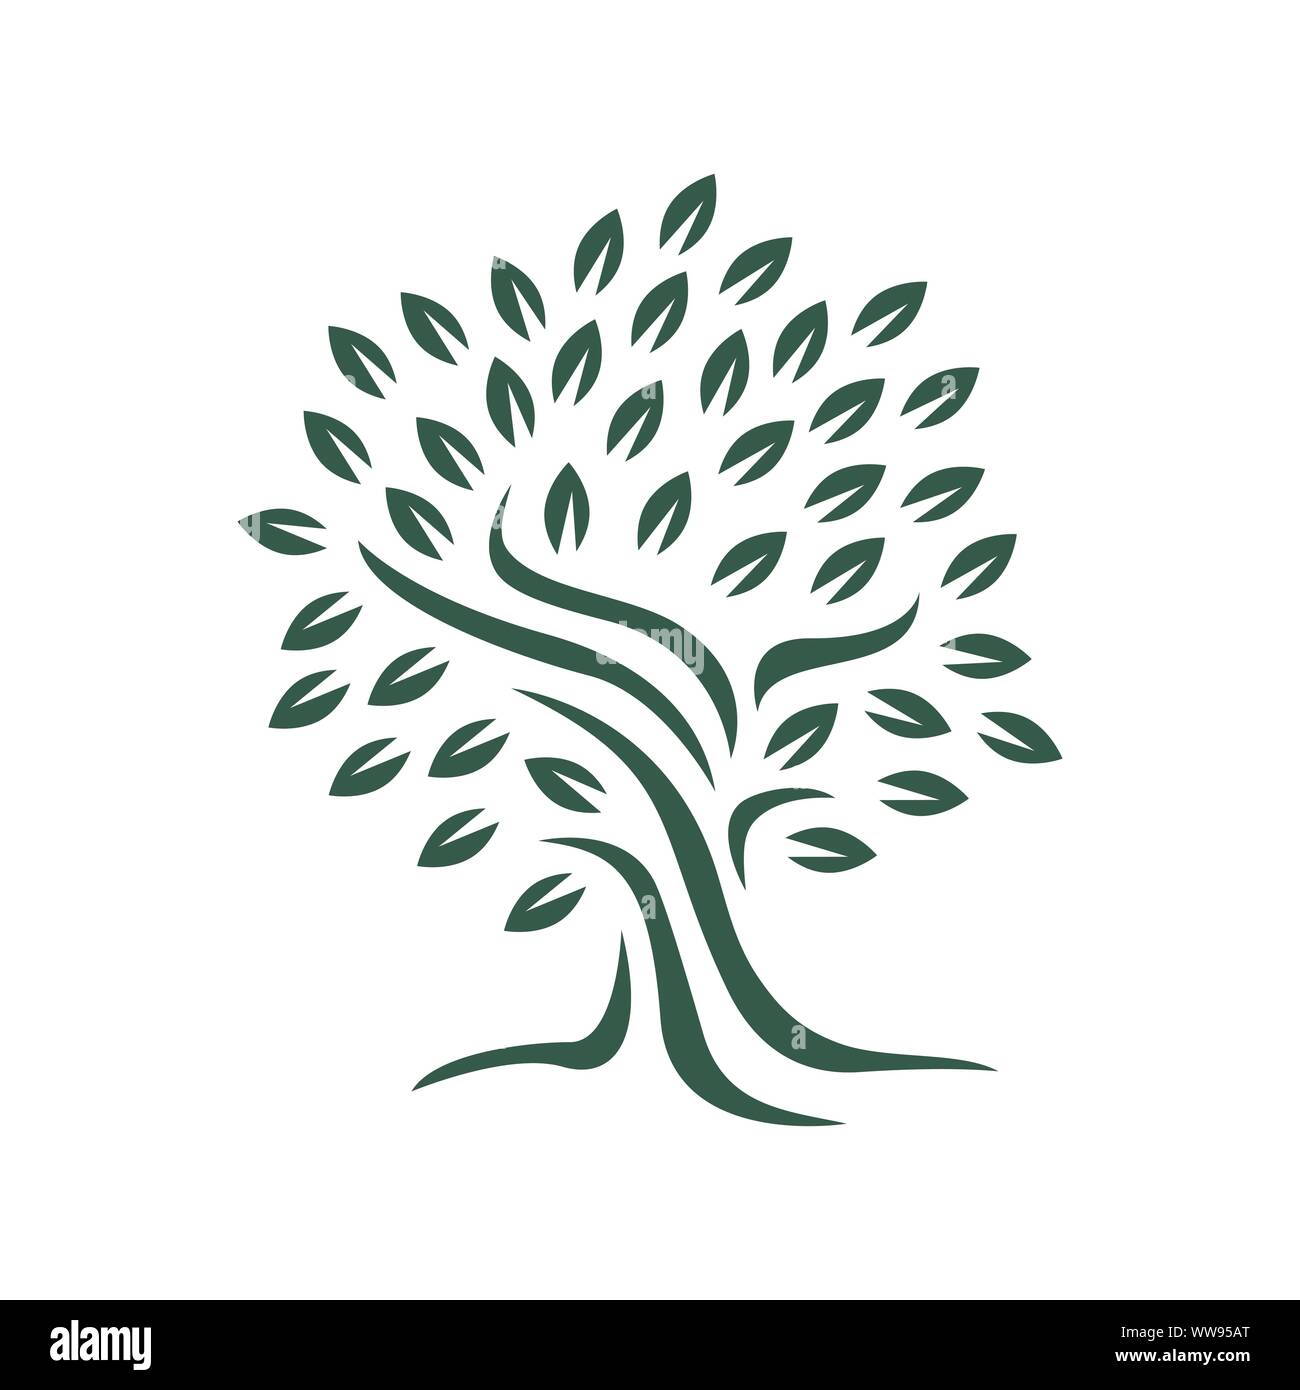 Einfache Silhouette des Baumes logo Vektorgrafik Elemente Stock Vektor